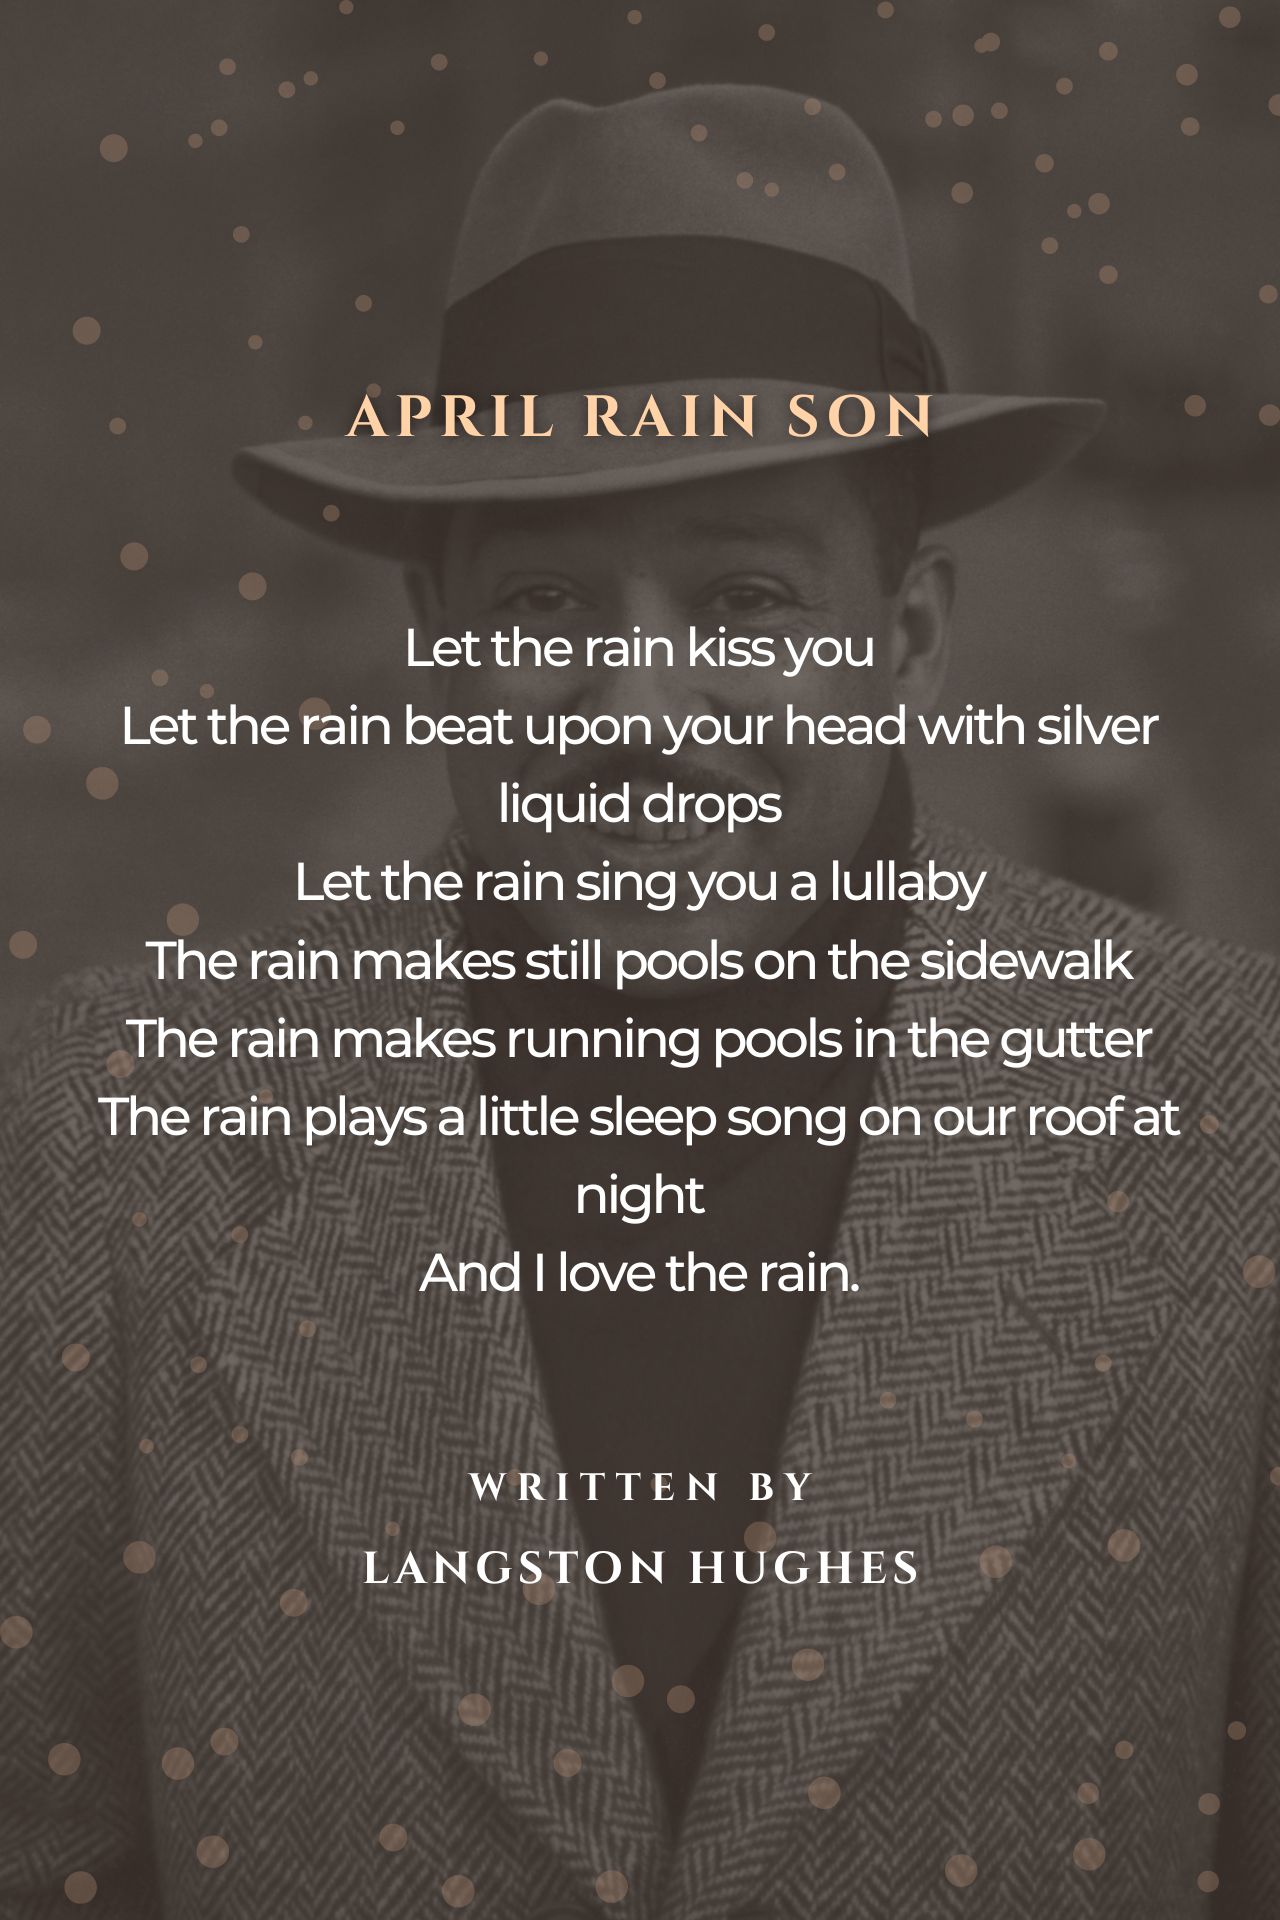 April Rain Song